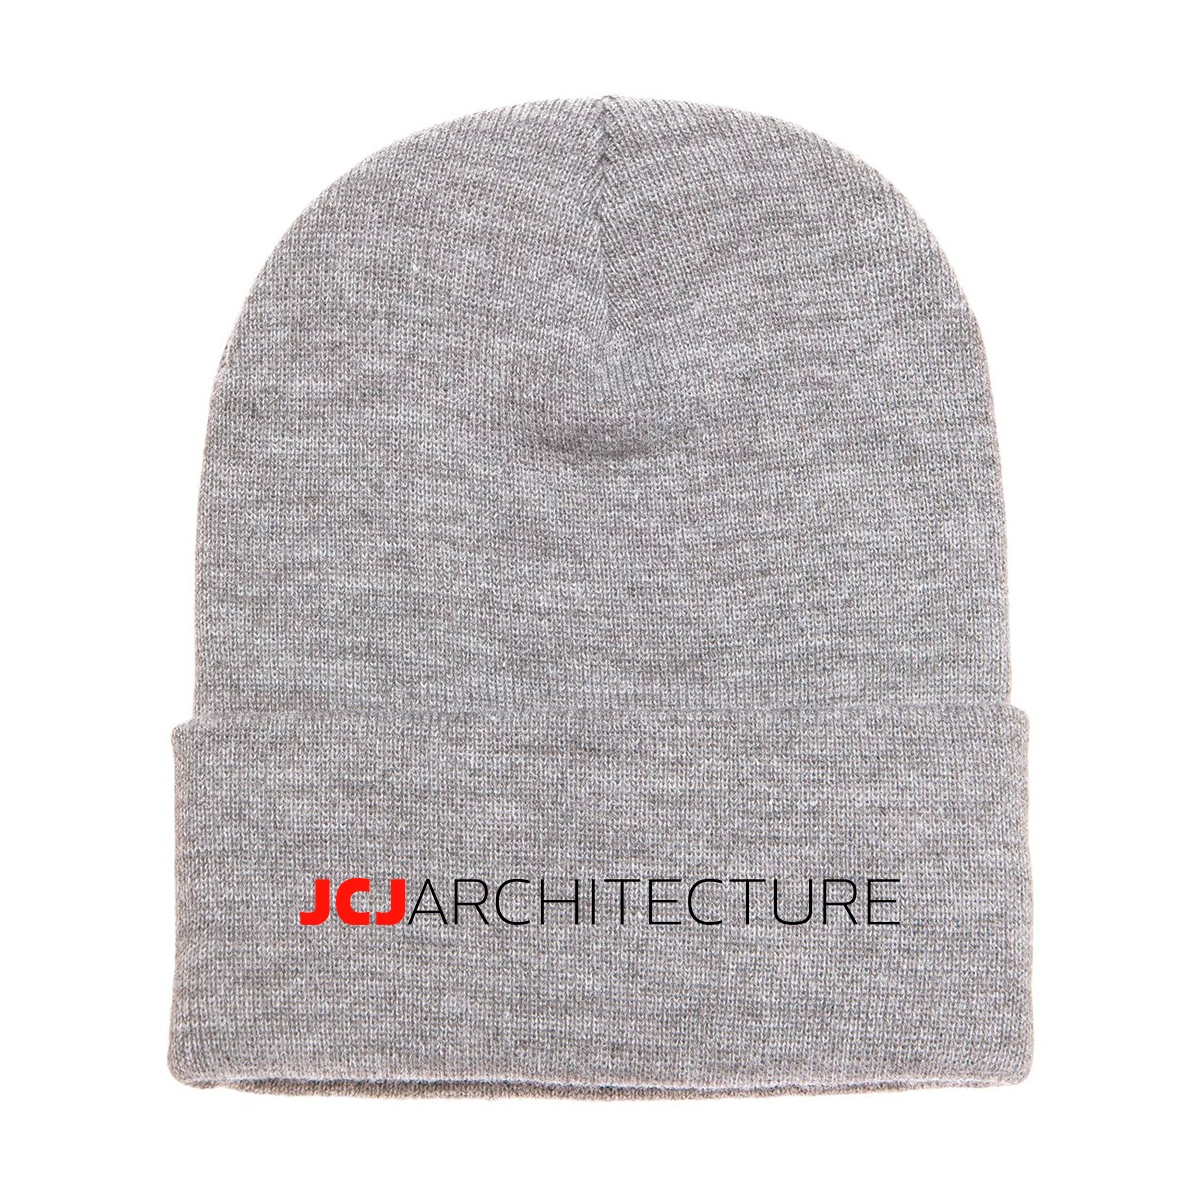 JCJ ARCHITECTURE | Shop